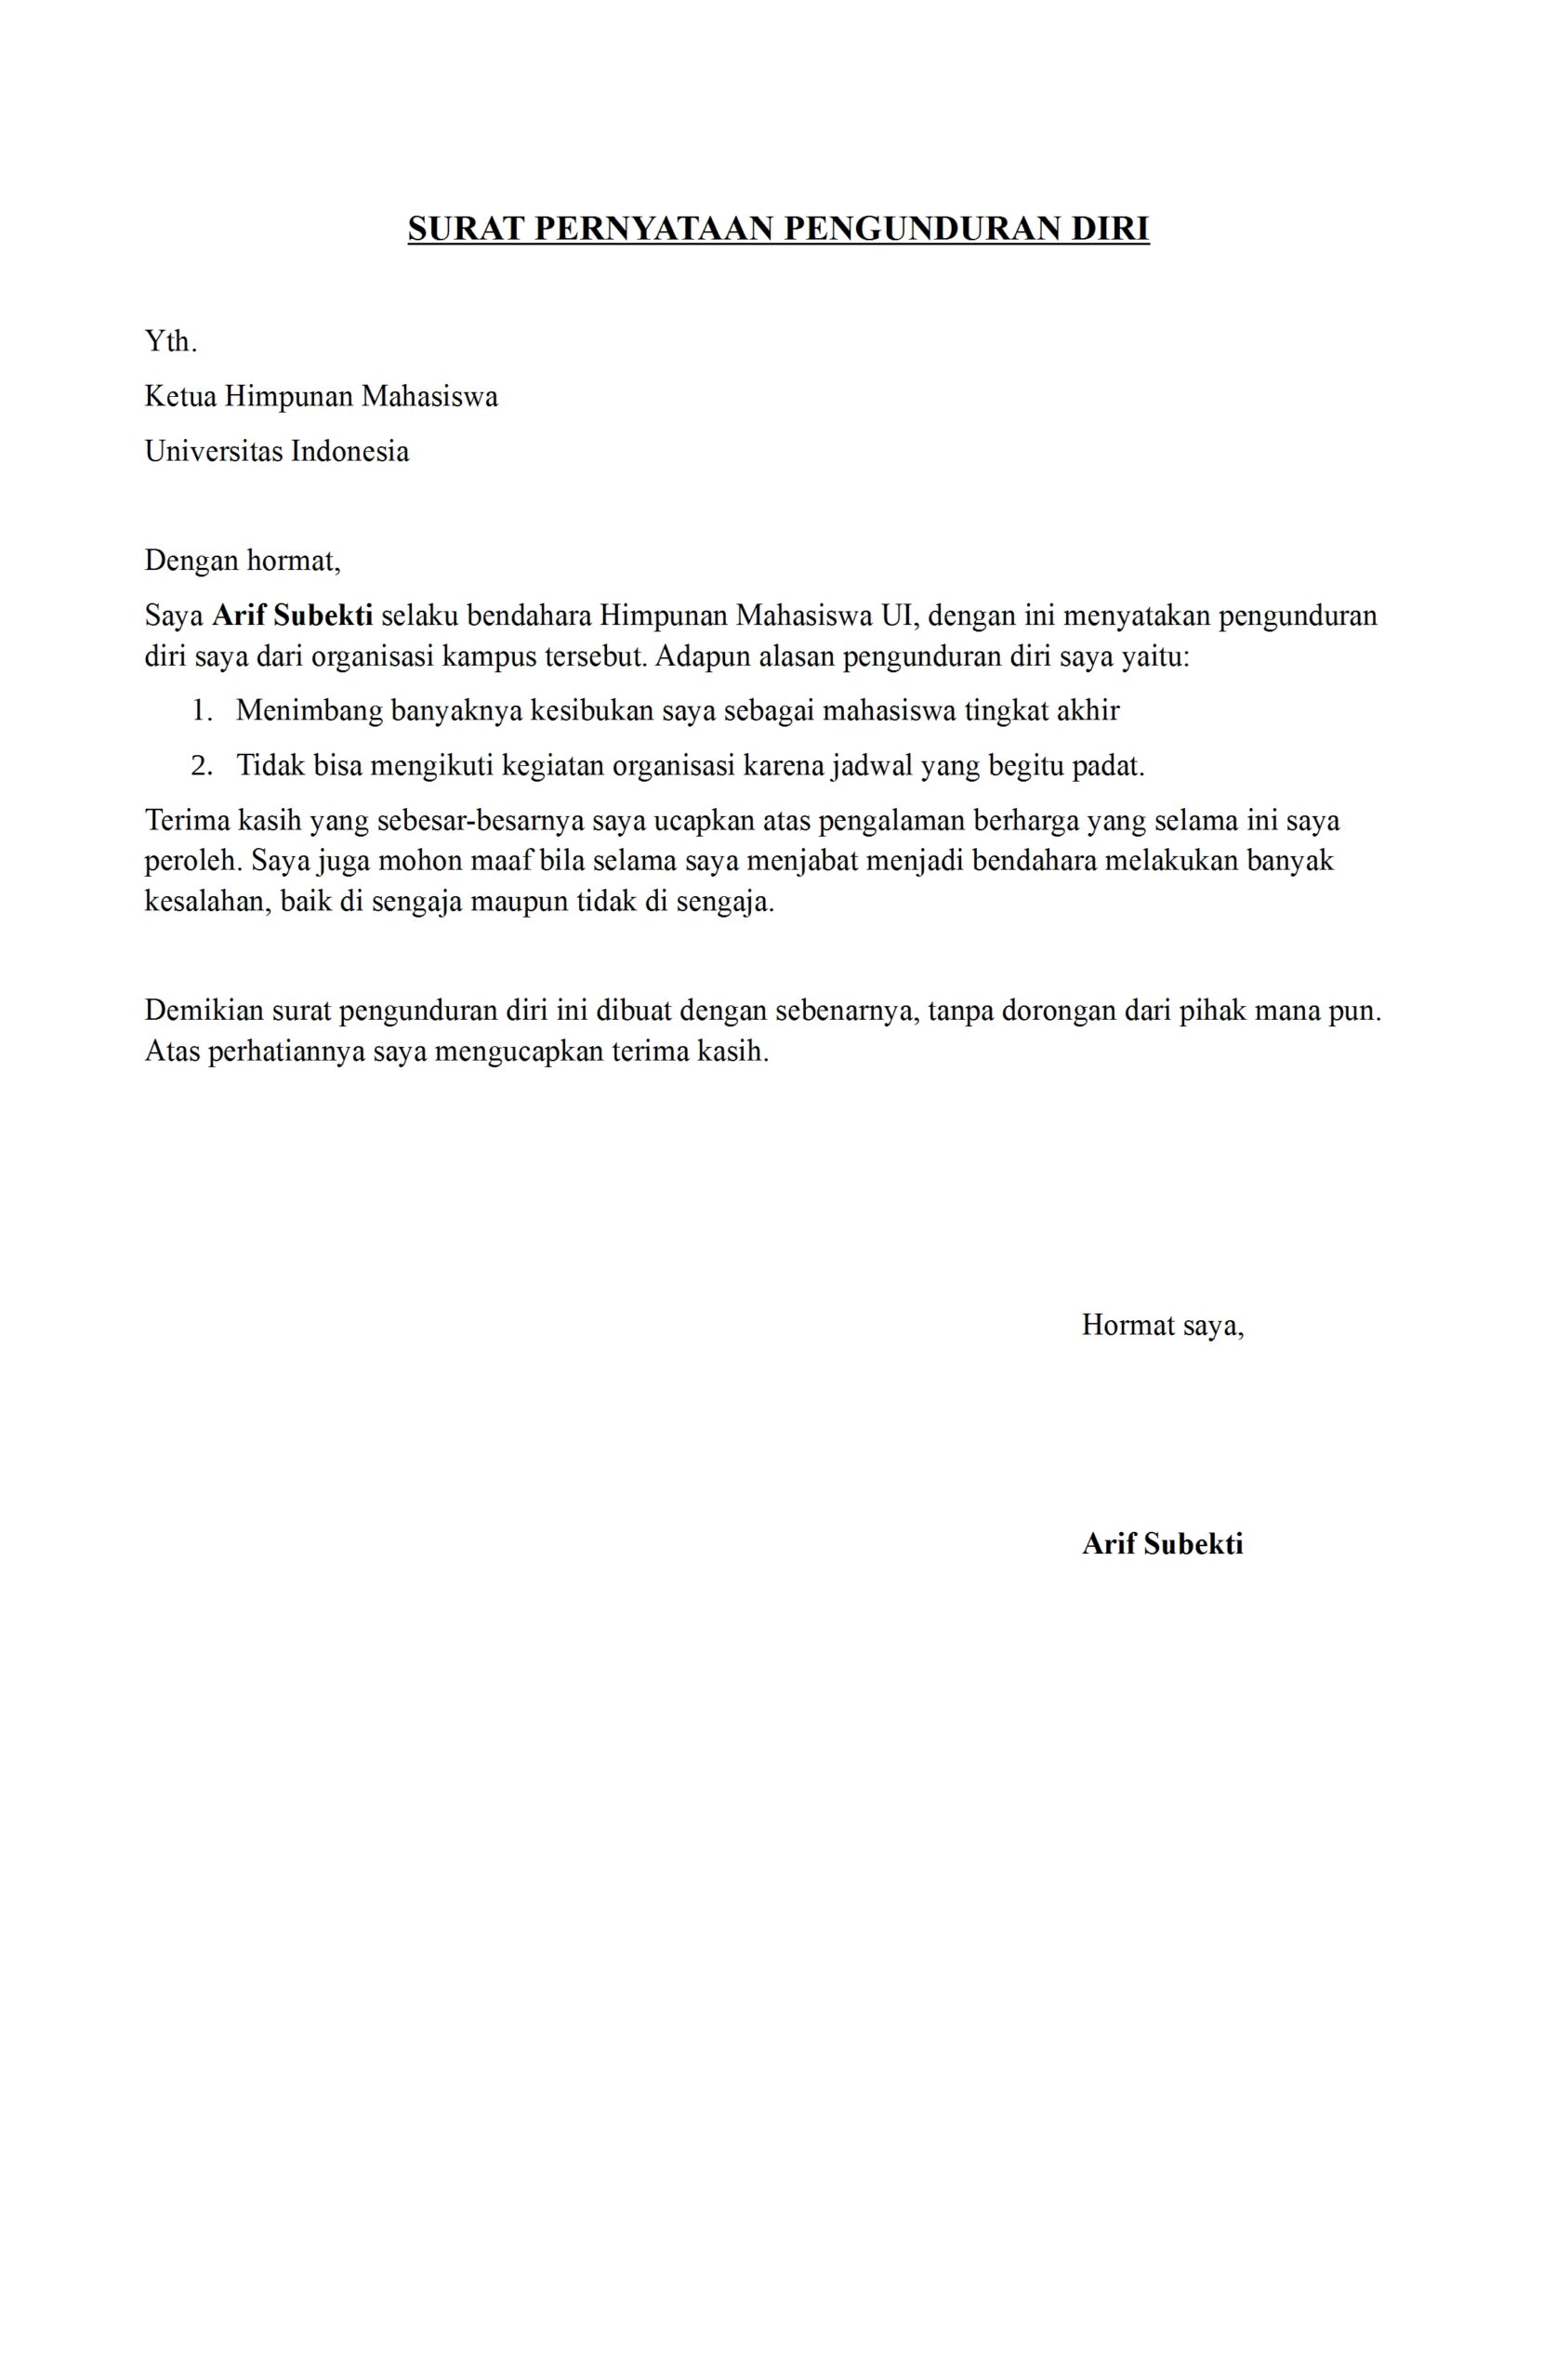 11. Contoh Surat Pengunduran Diri Dari Organisasi HMI Himpunan Mahasiswa Indonesia